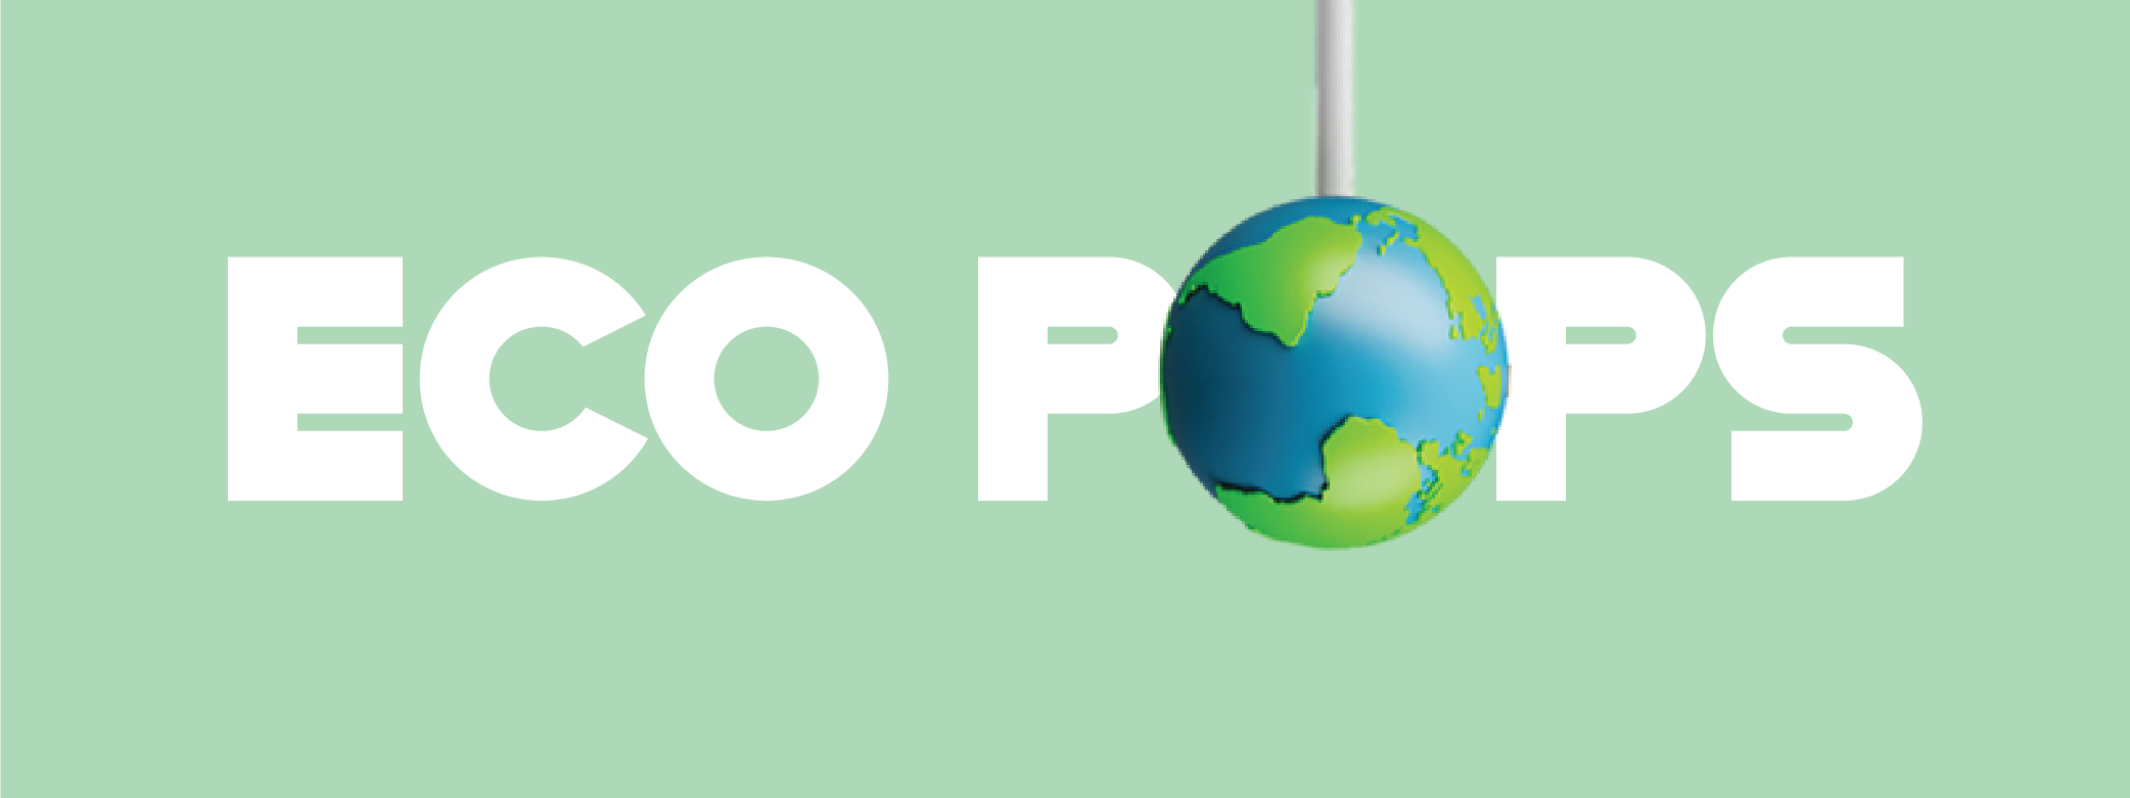 Eco Pops by Chupa Chups